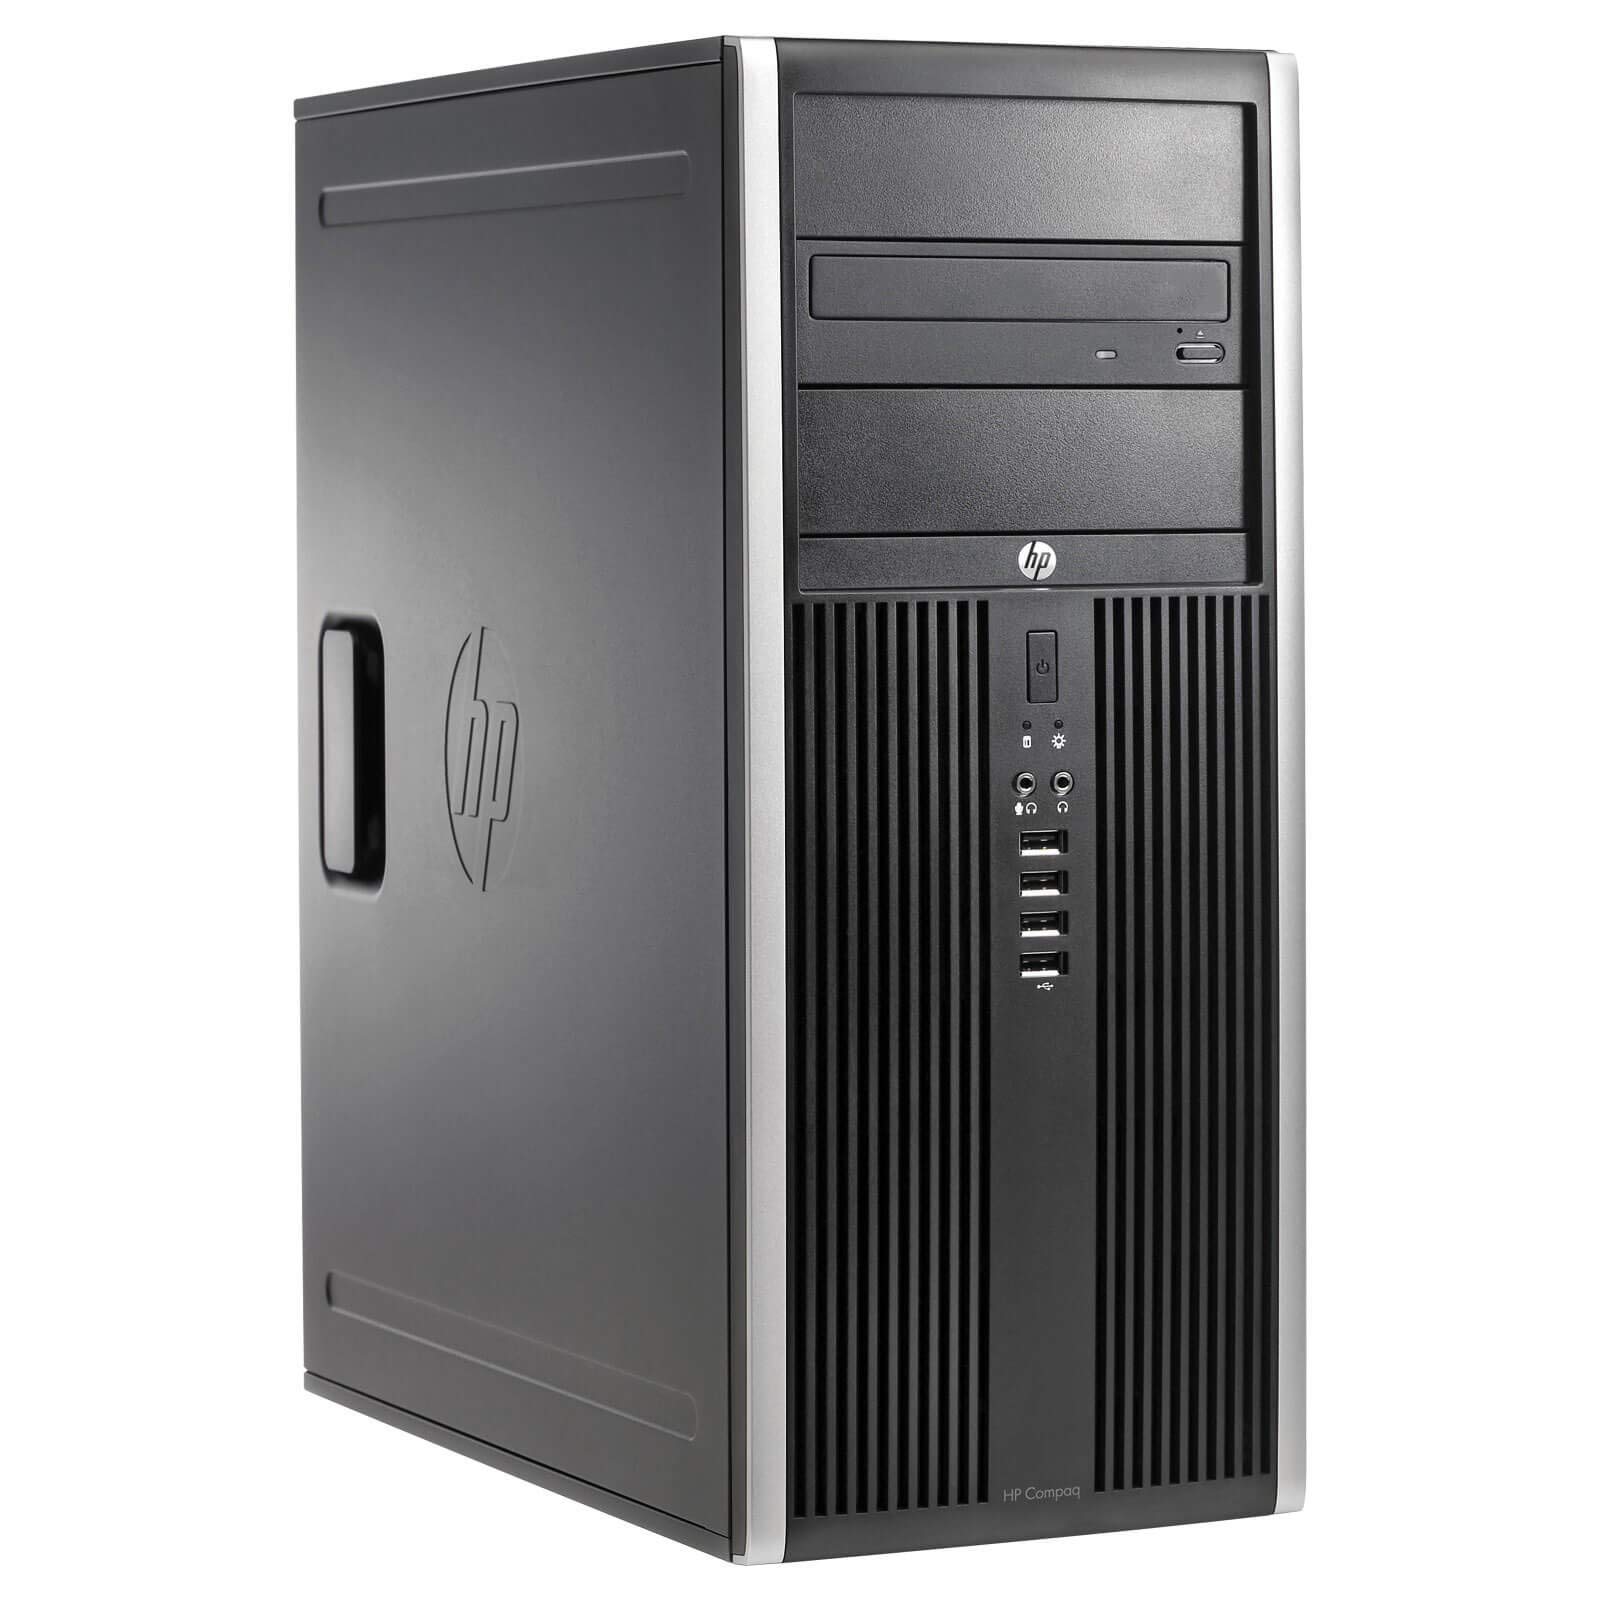 HP Compaq 8200 Elite Minitower PC - Intel Core i5-2400 3.1GHz 8GB 250GB DVDRW Windows 10 Professional (Renewed)